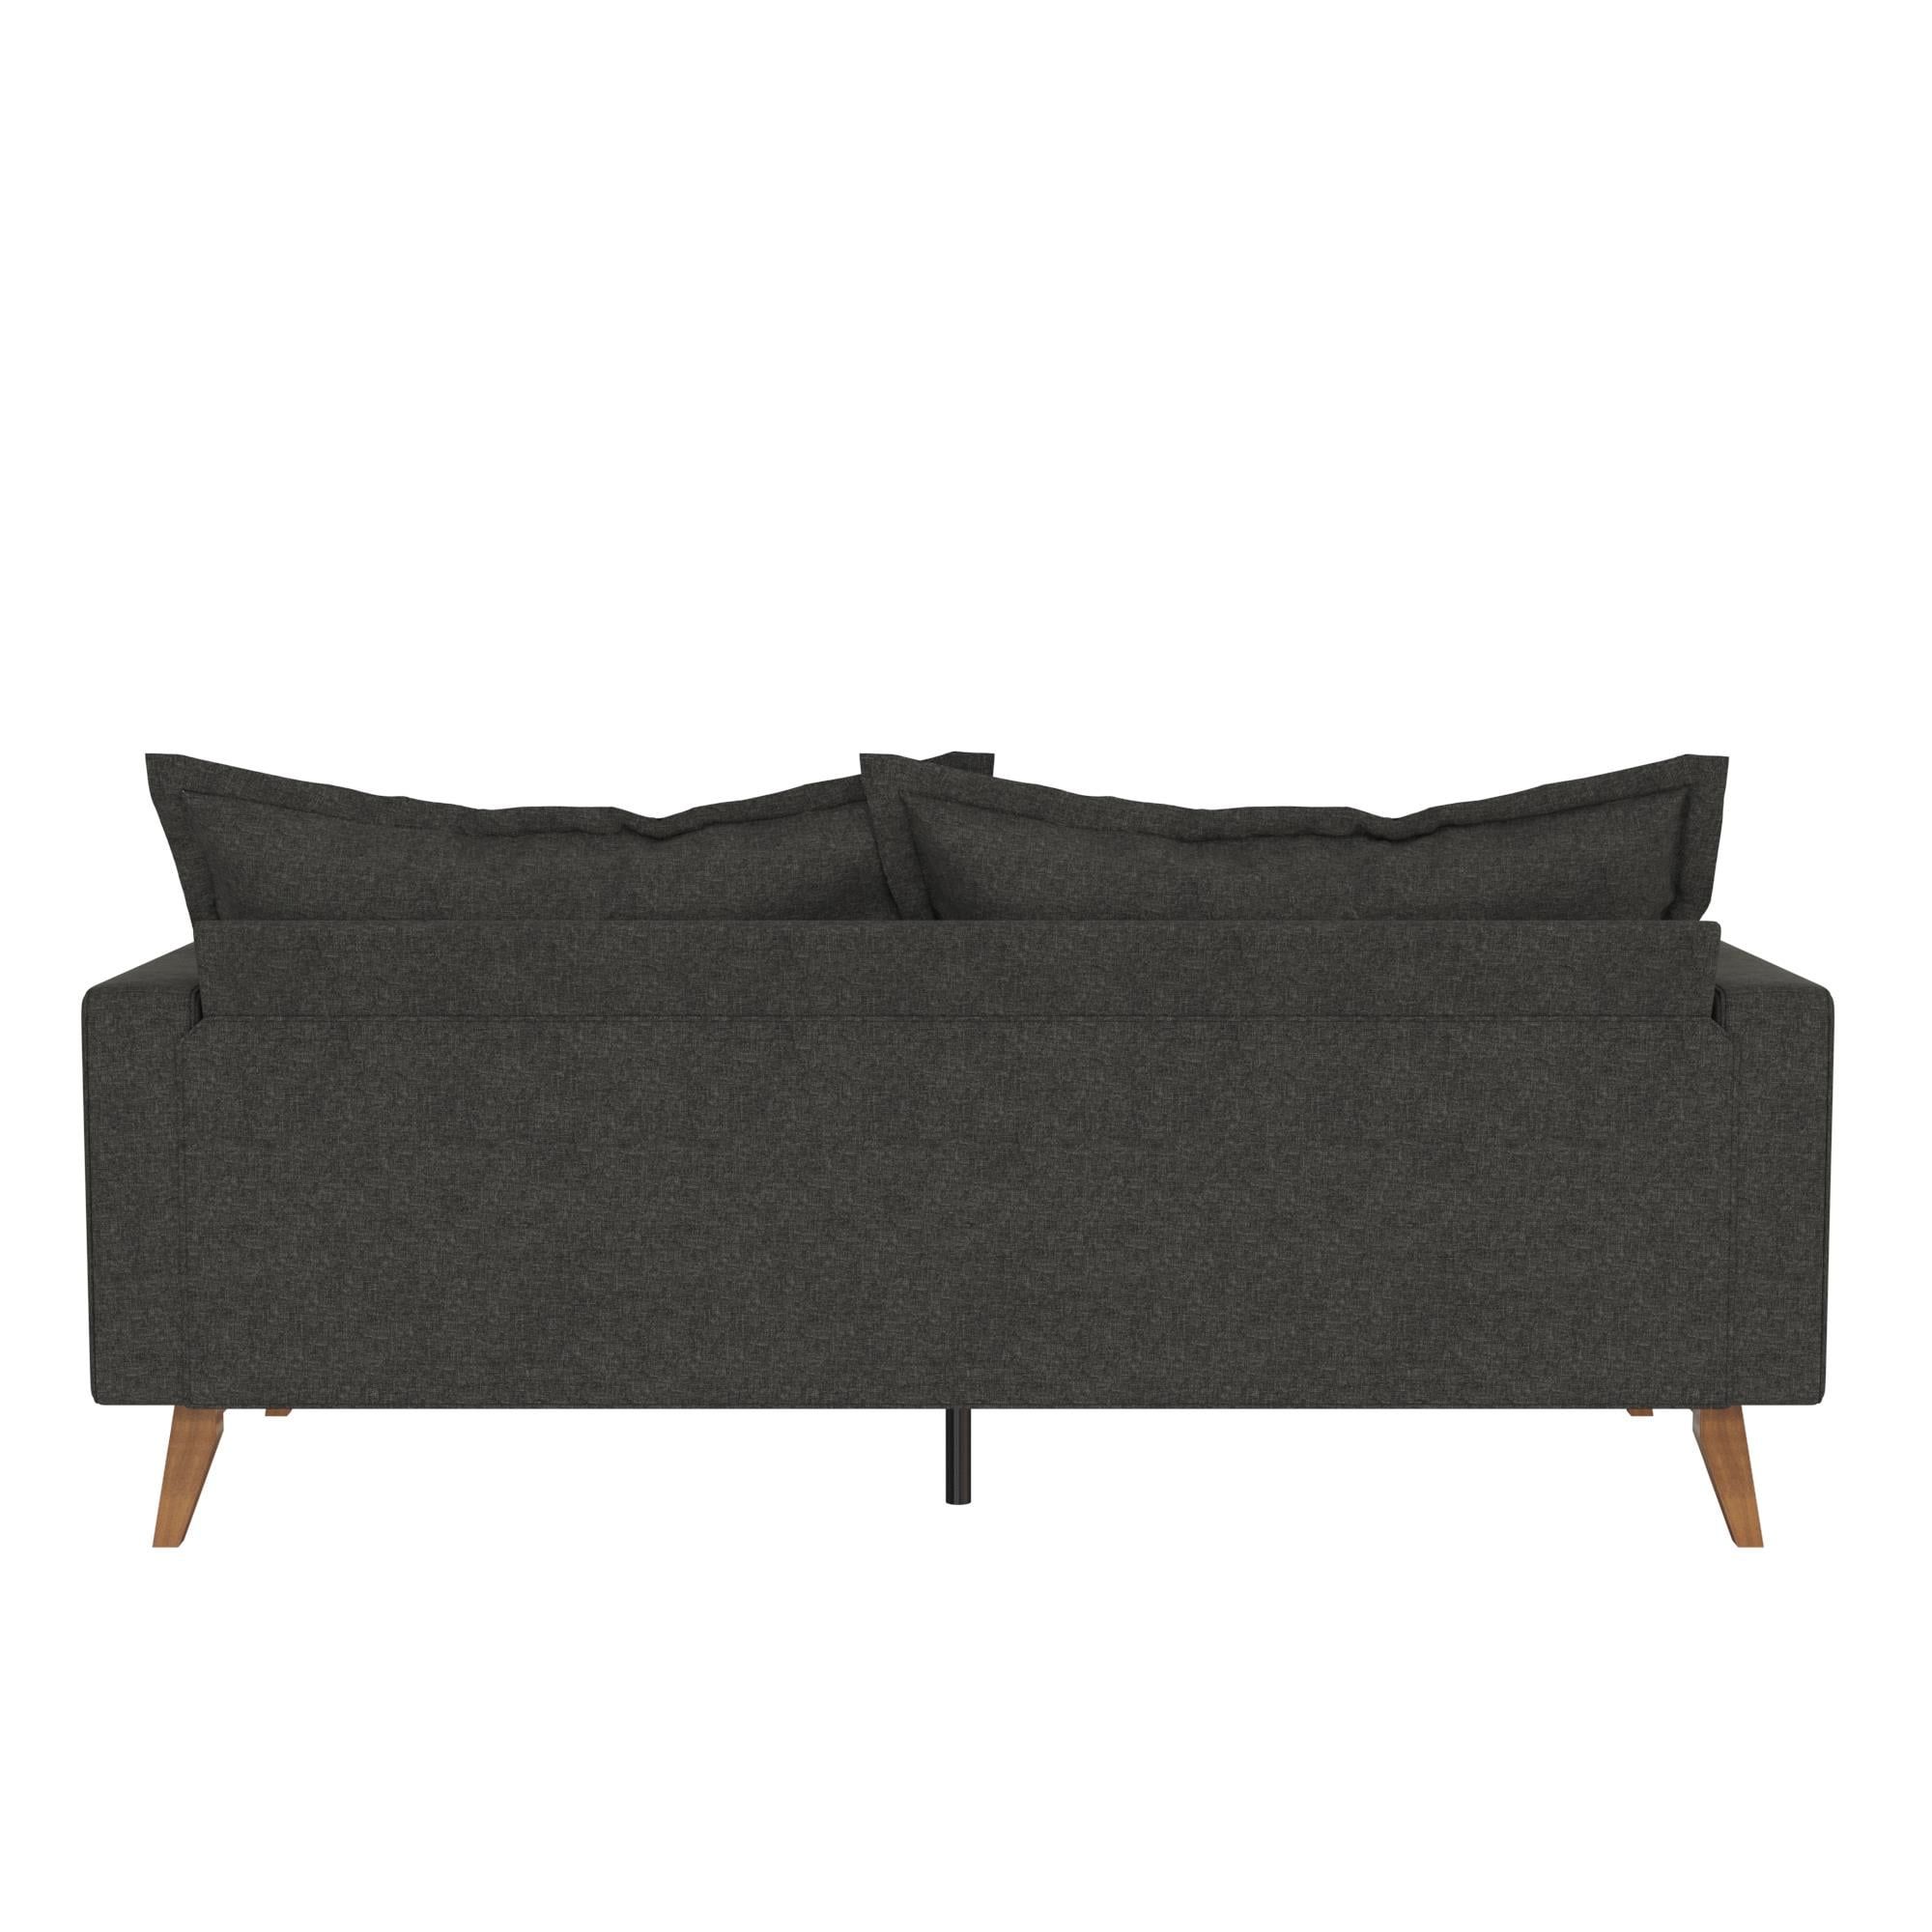 Dhp Miriam Pillowback Wood Base Sofa, Gray Linen – Walmart Regarding Sofas With Pillowback Wood Bases (View 11 of 20)